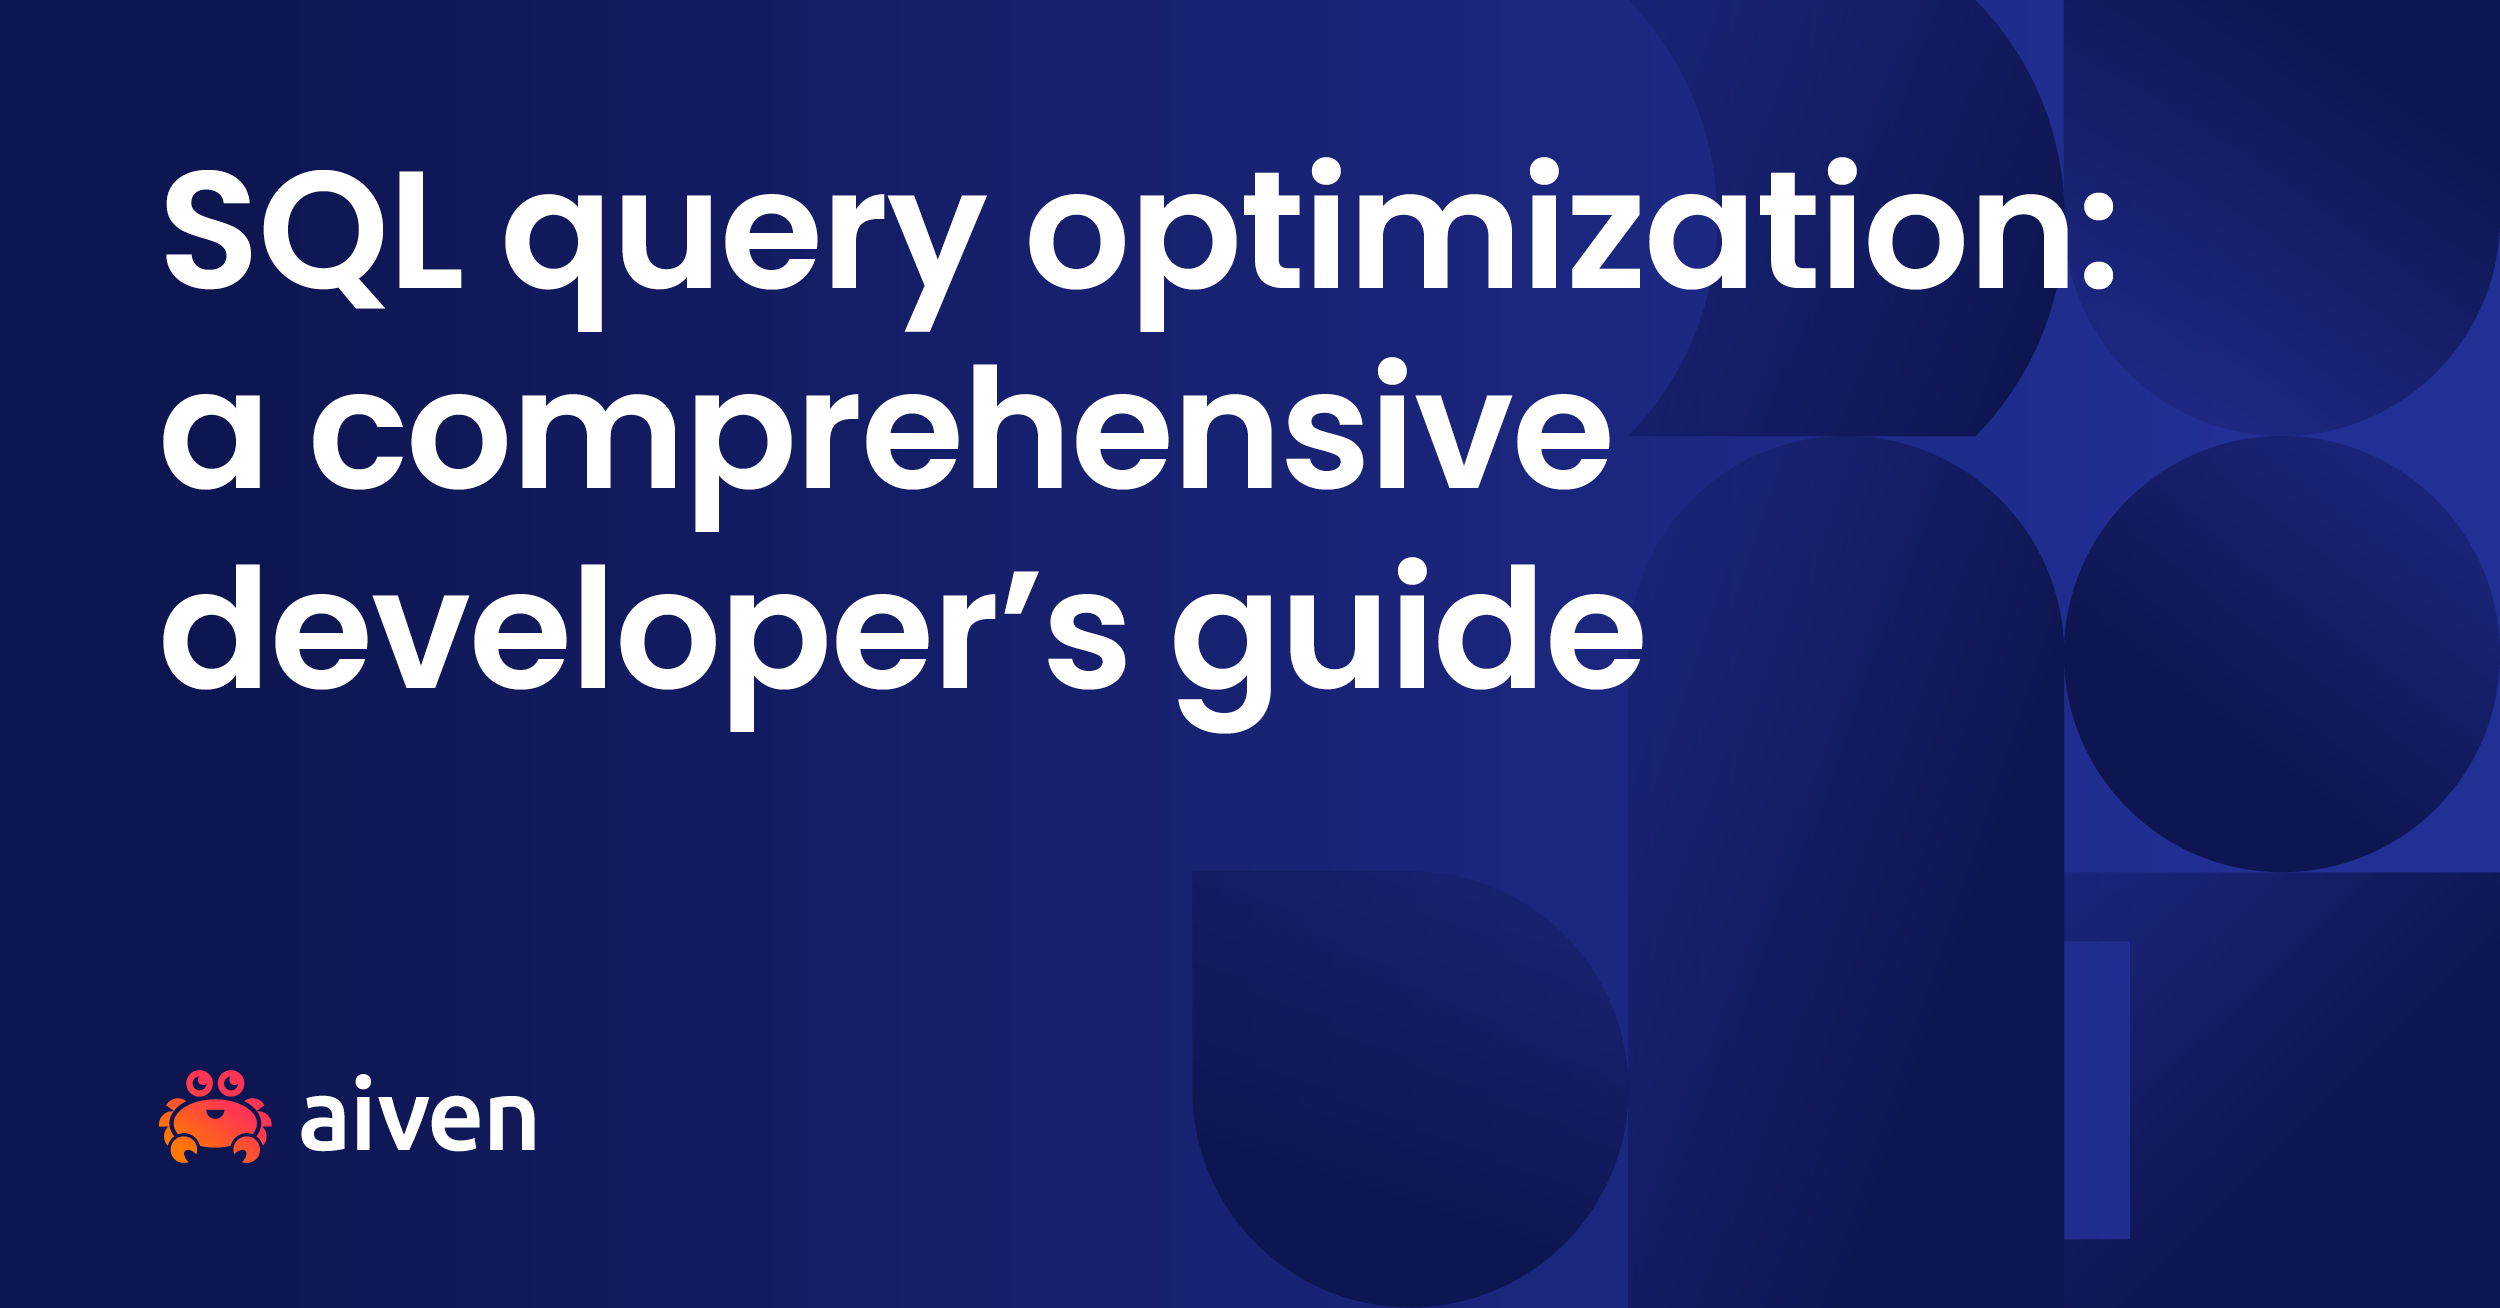 SQL query optimization: a comprehensive developer's guide illustration